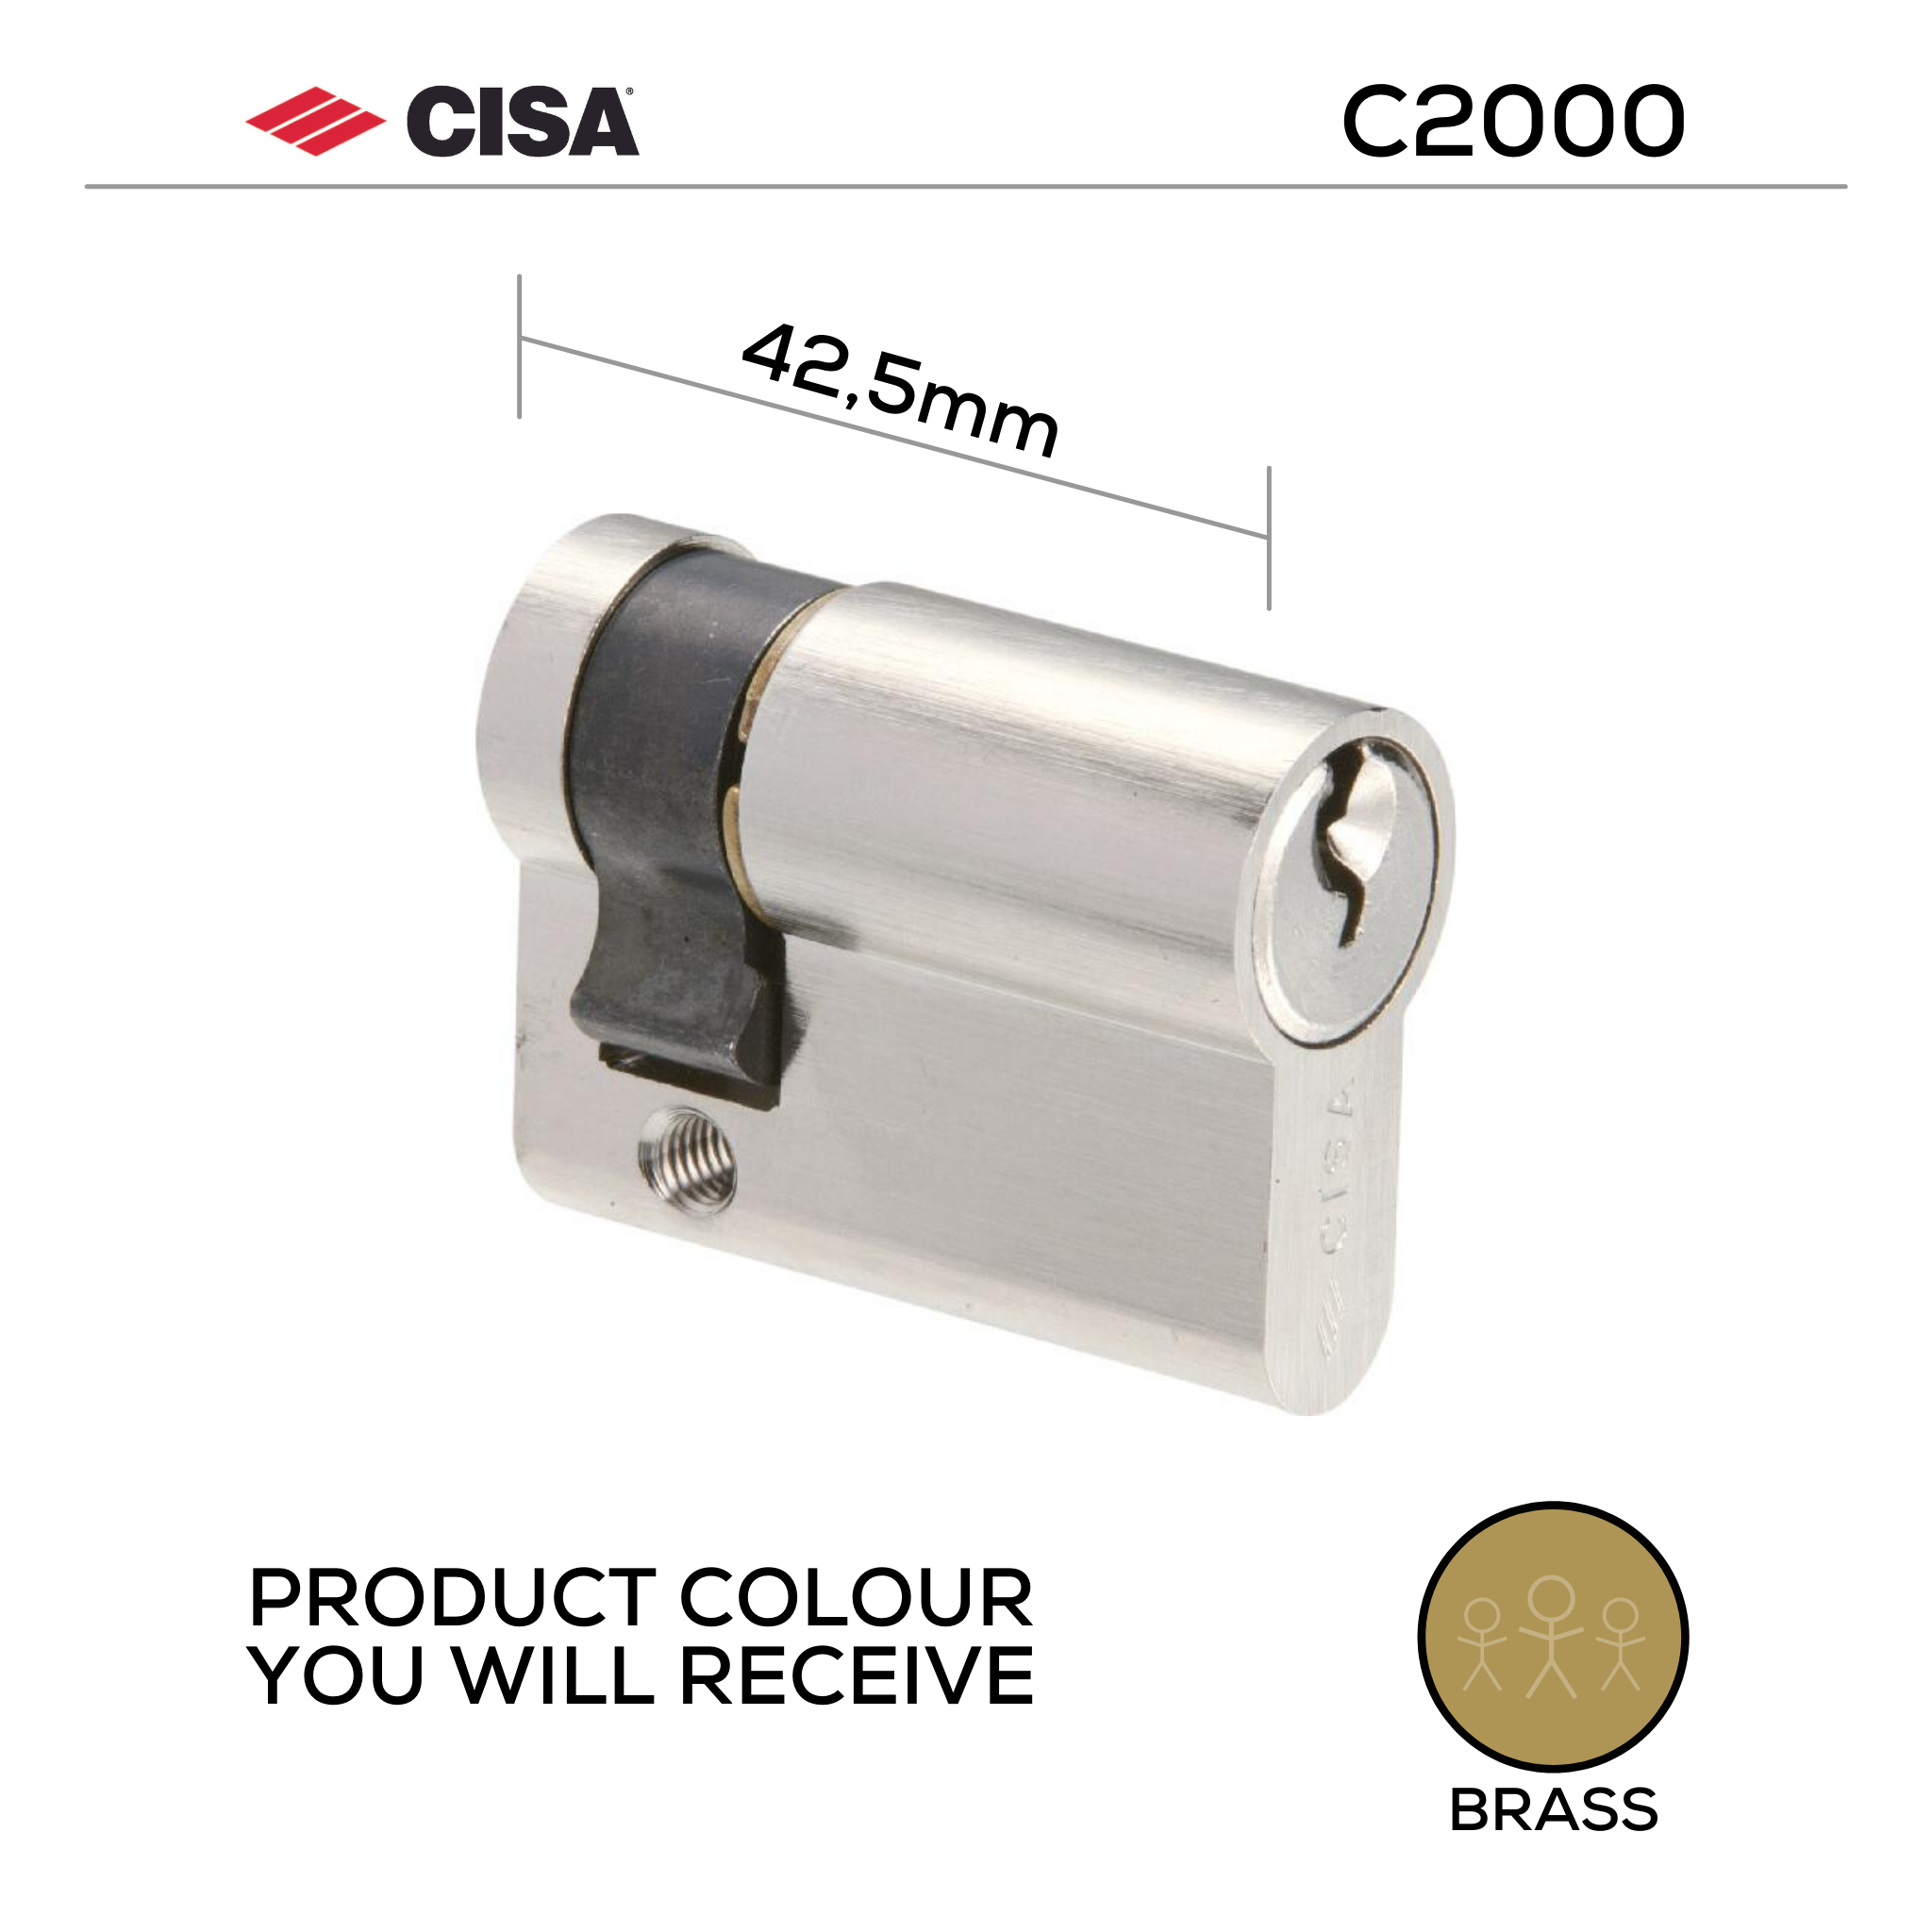 09026-02-00-KD, 42,5mm - 32.5/10, Oval Half (Single Cylinder), C2000, Key, Keyed to Differ (Standard), Brass, CISA